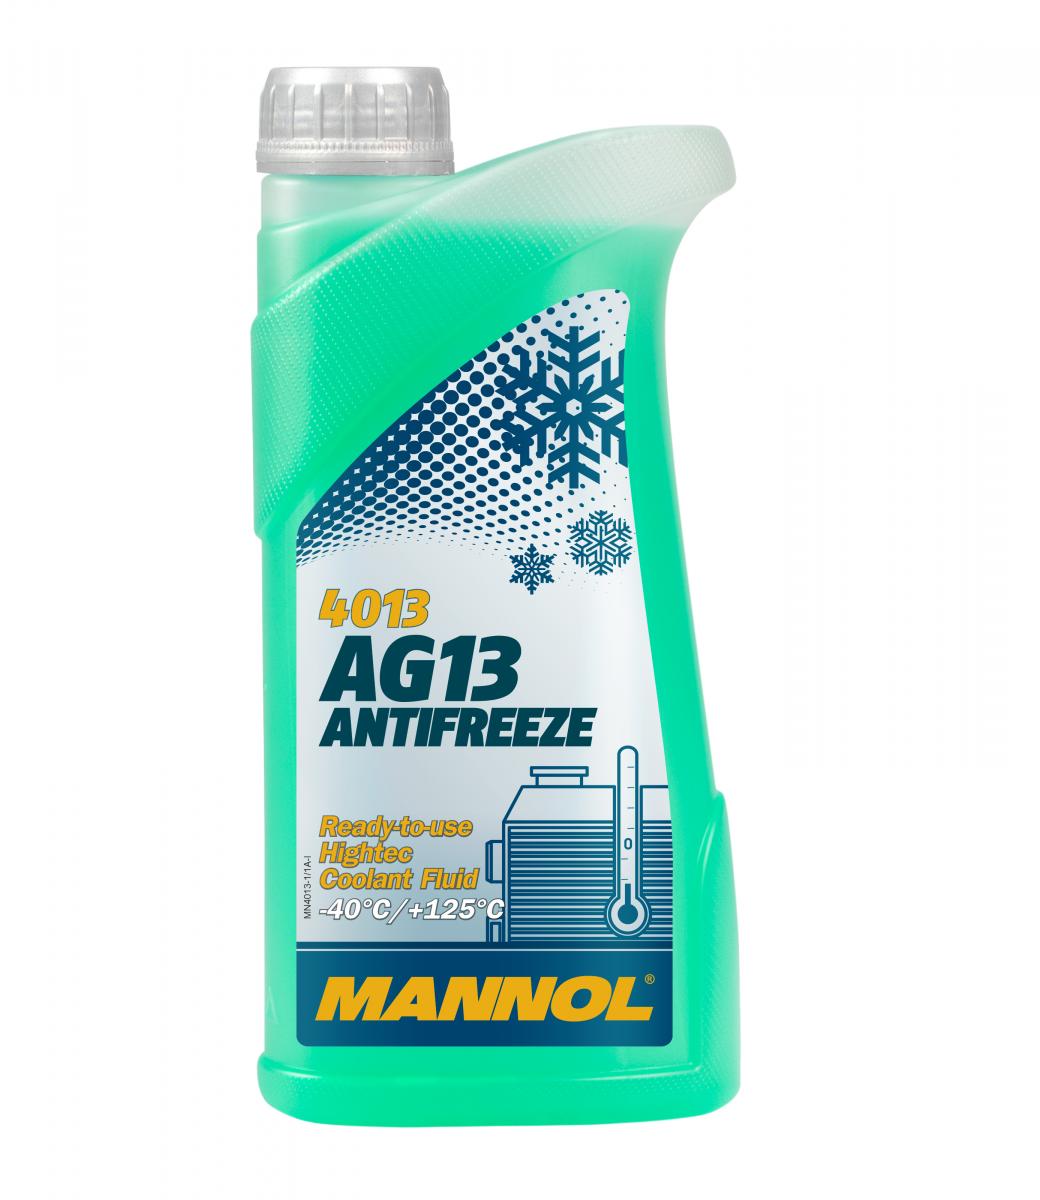 3 Liter (3x1) MANNOL hightech Antifreeze AG13 Frostschutz Fertiggemisch grün -40°C G13